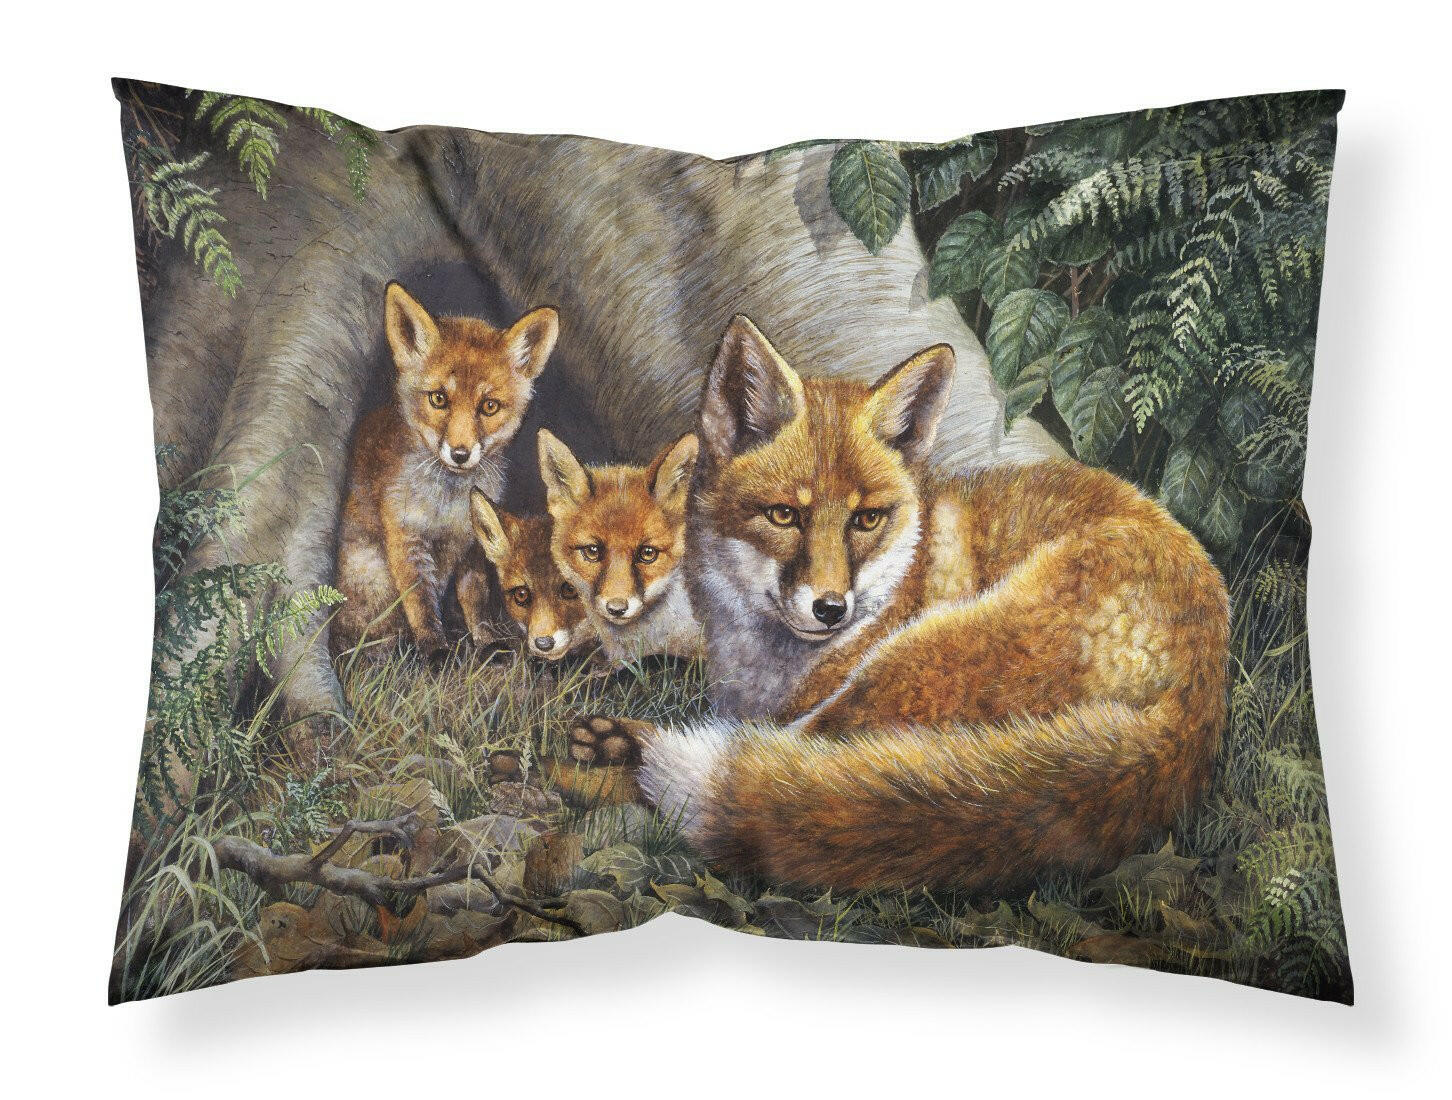 A Family of Foxes at Home Fabric Standard Pillowcase BDBA0283PILLOWCASE by Caroline's Treasures